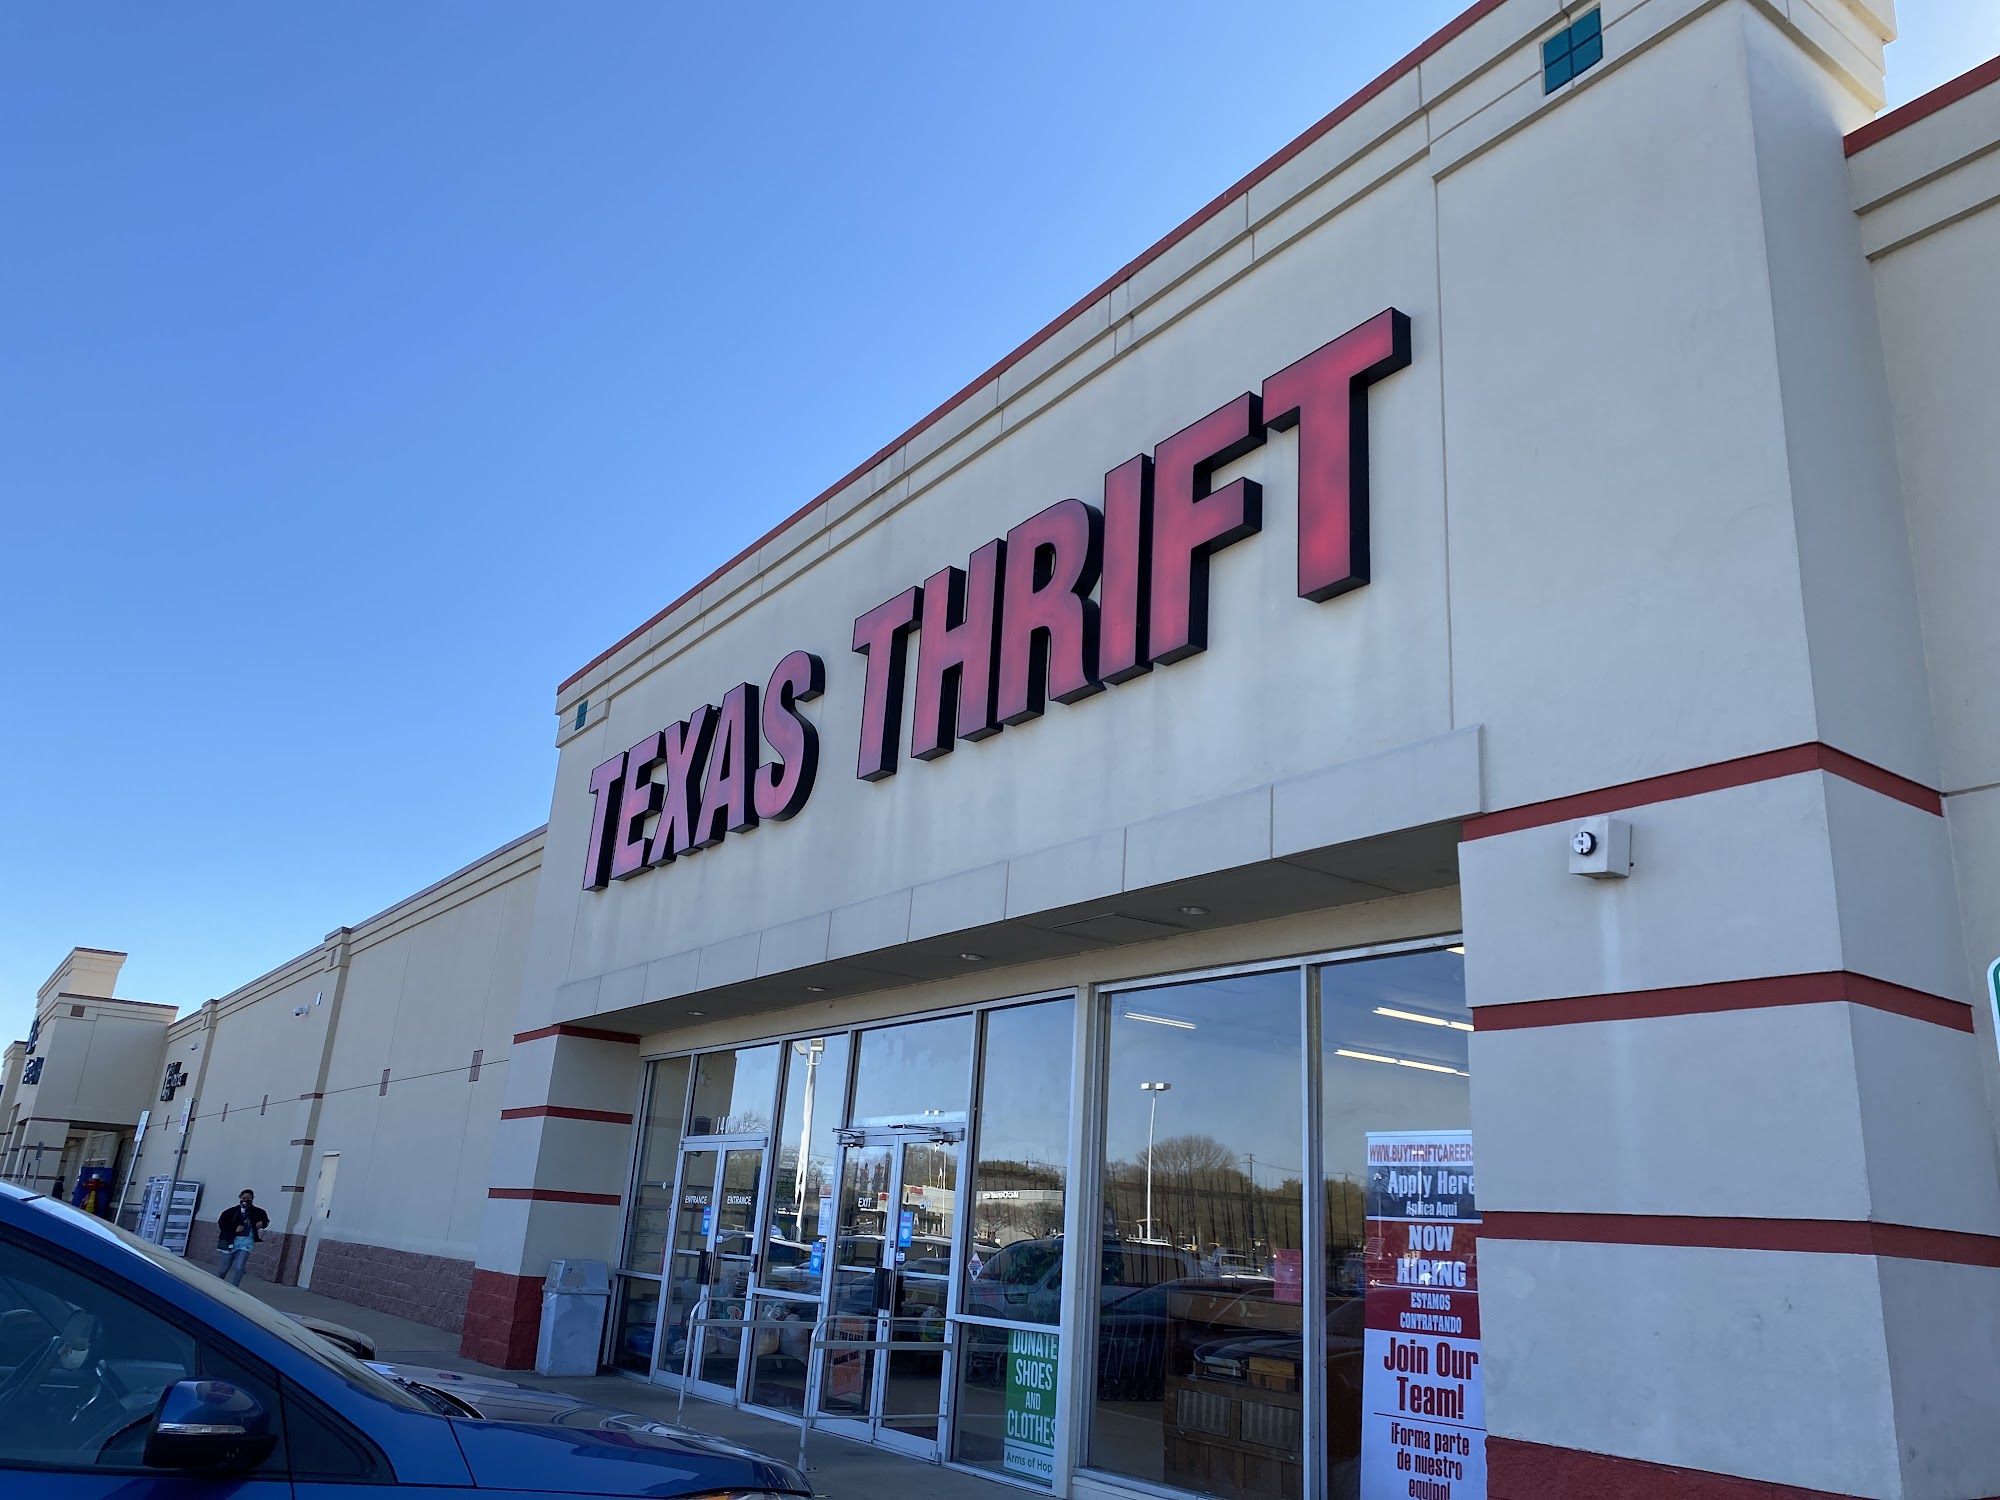 Texas Thrift Store